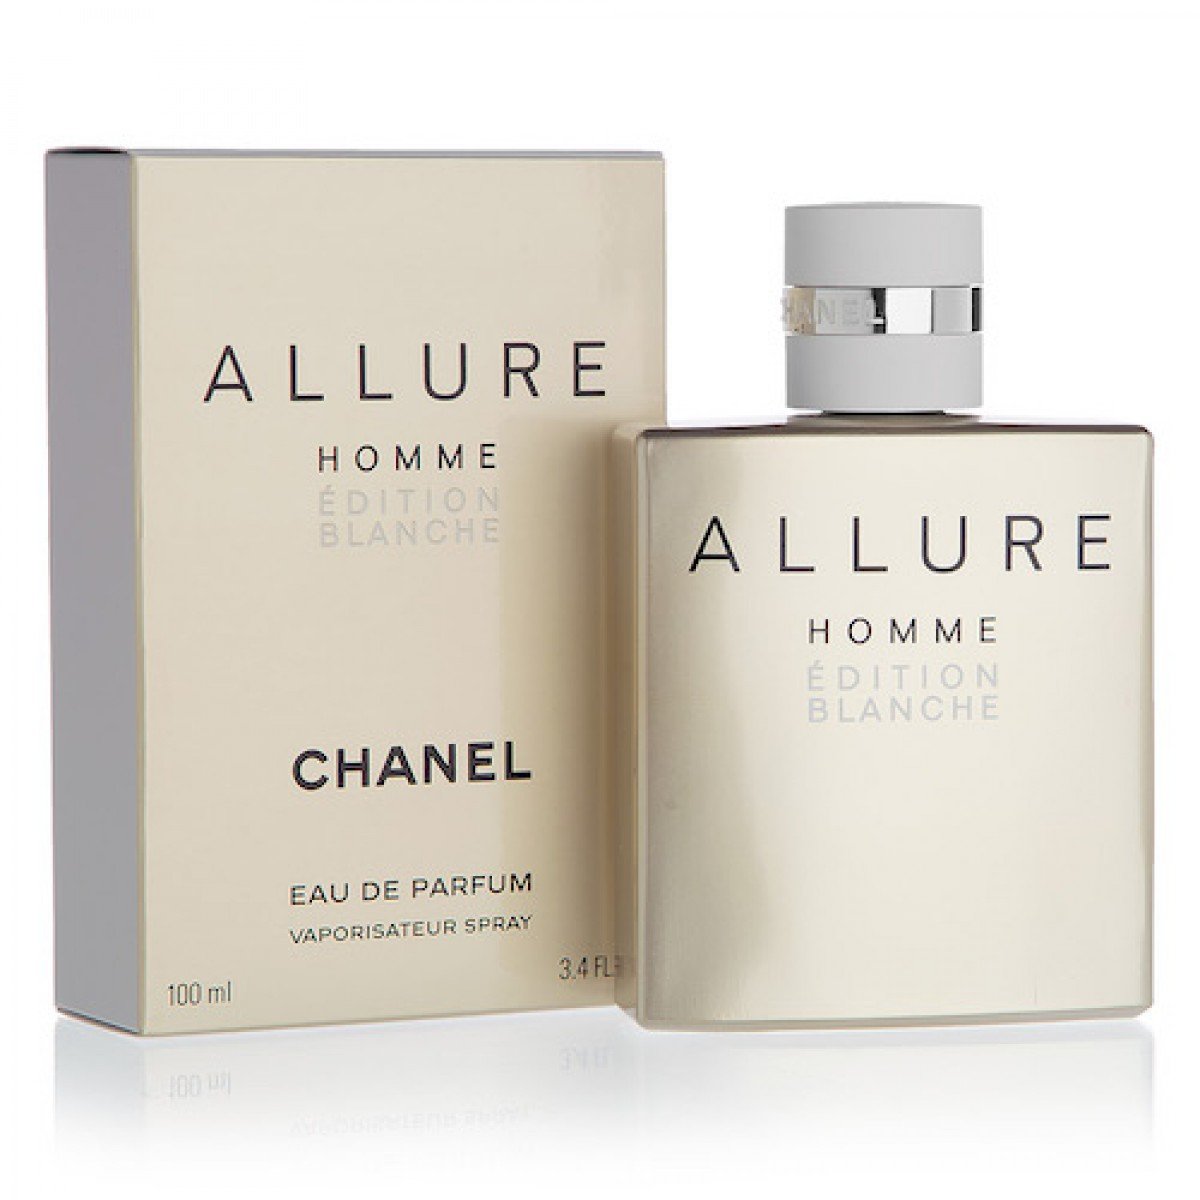 Туалетная вода chanel sport. Chanel Allure homme Edition Blanche 100ml. Chanel Allure homme Edition Edition. Chanel Allure homme 100 ml. Chanel Allure homme Edition Blanche Eau de Parfum.